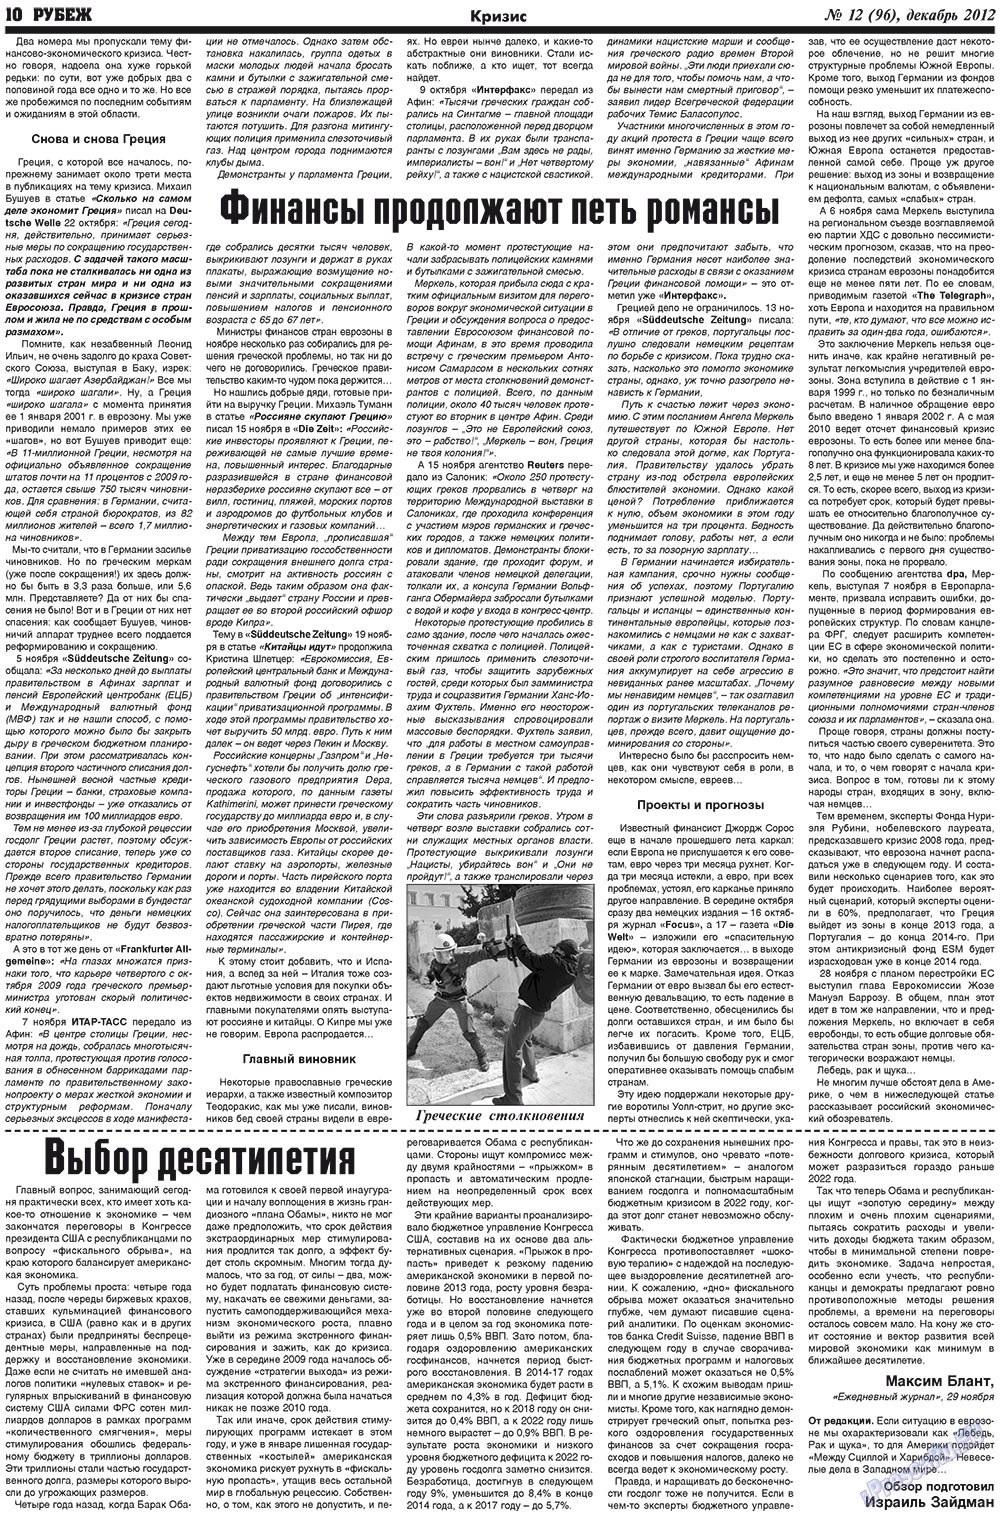 Рубеж, газета. 2012 №12 стр.10